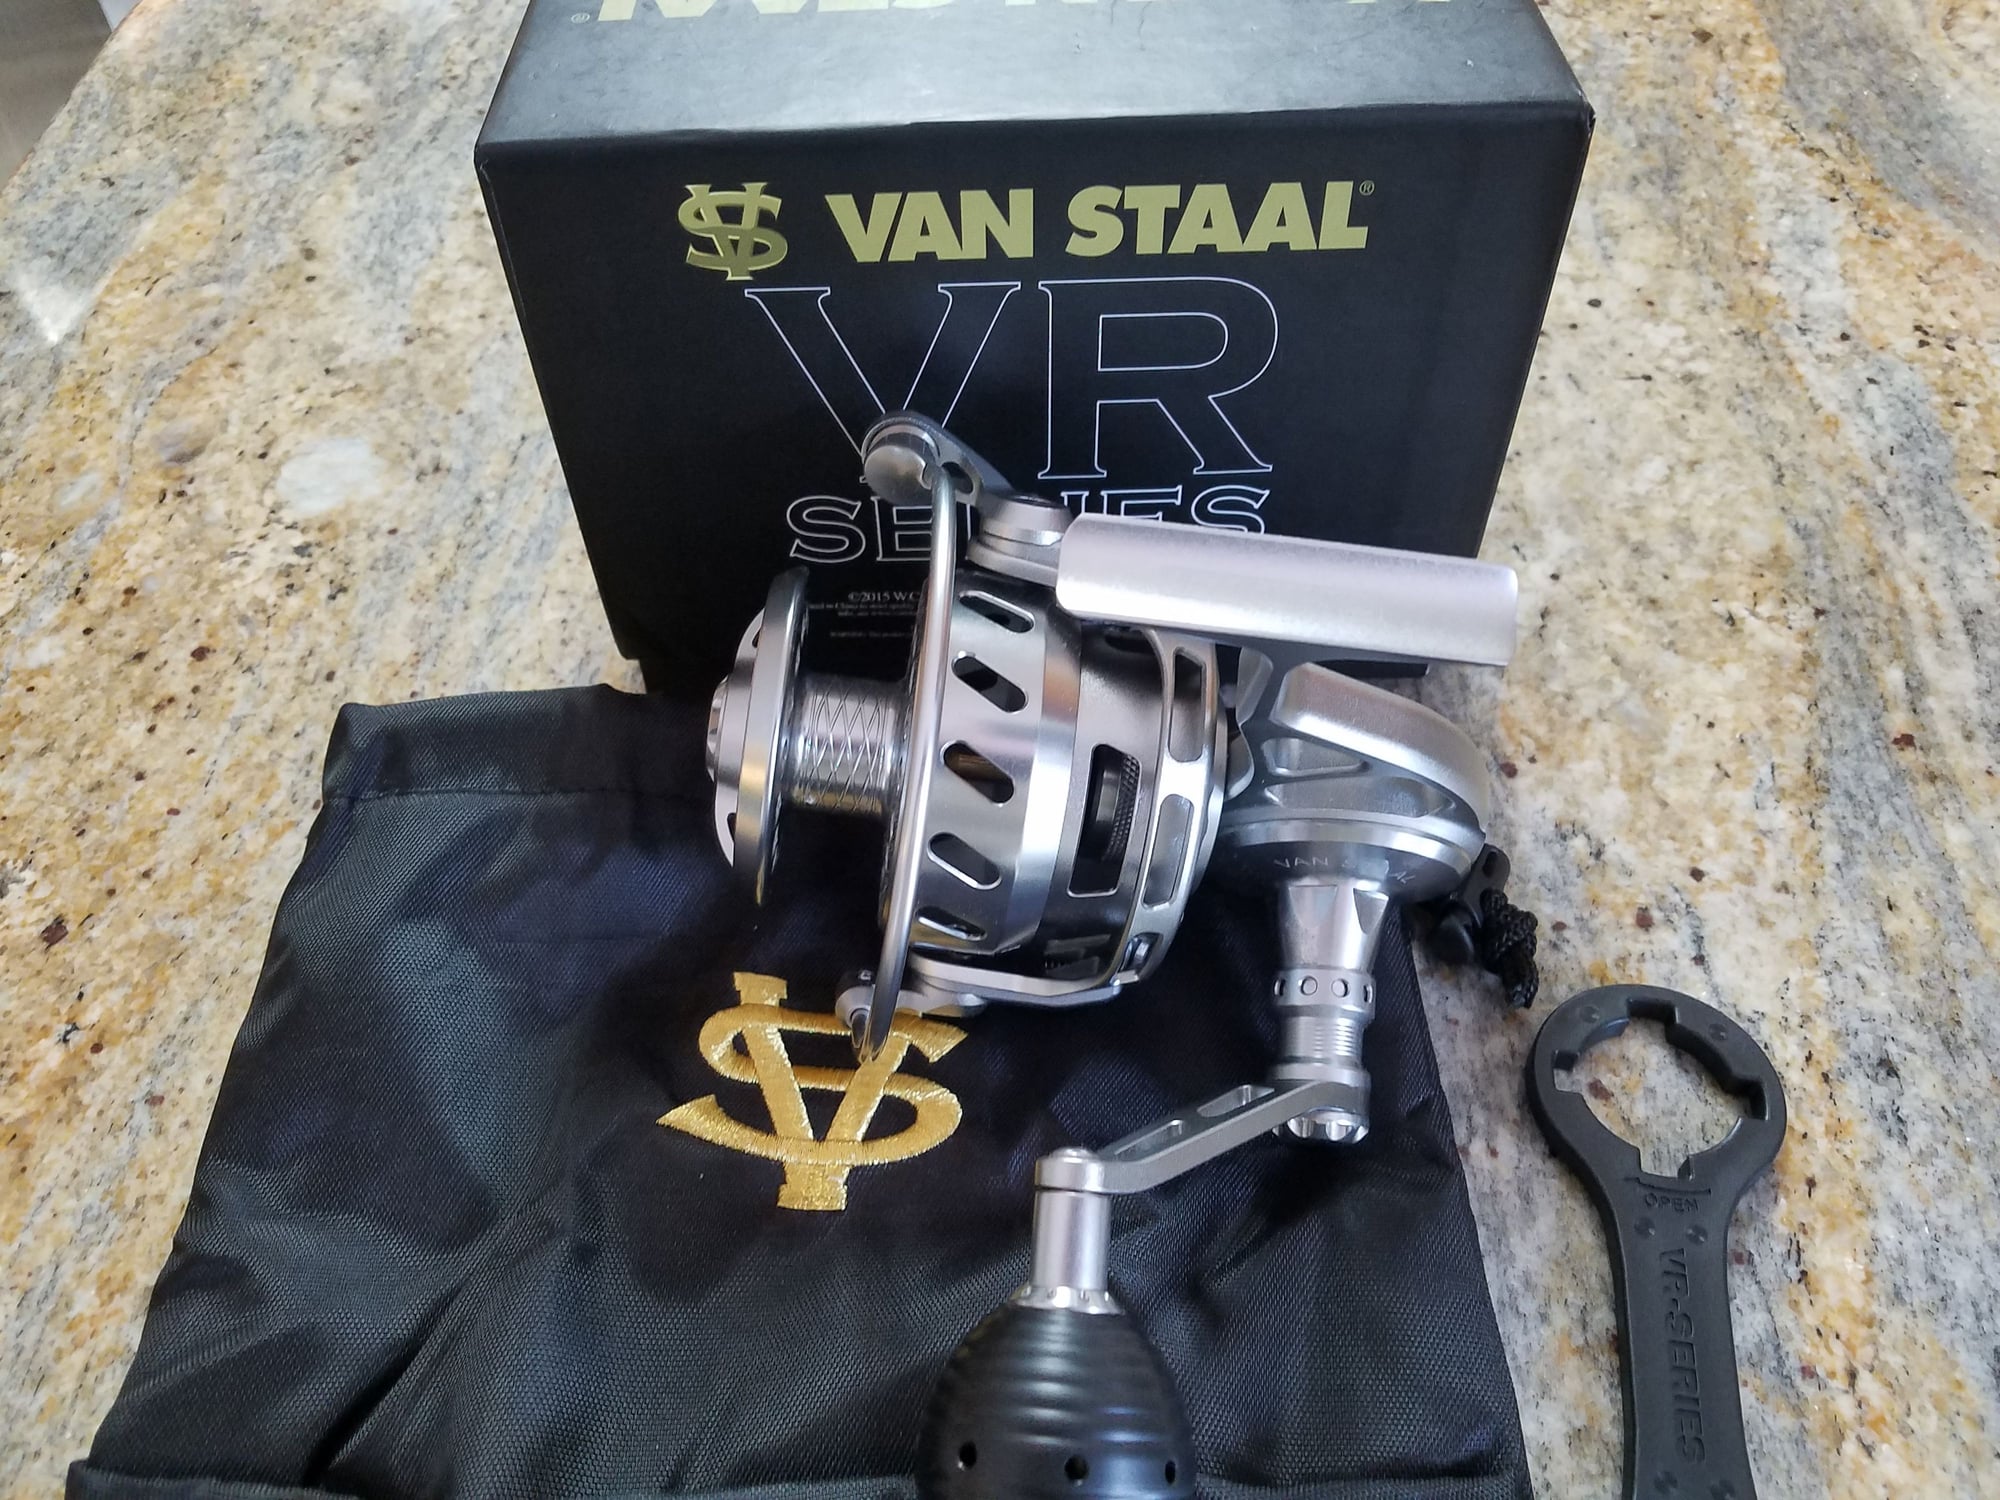 Van Staal Van Staal VR 175